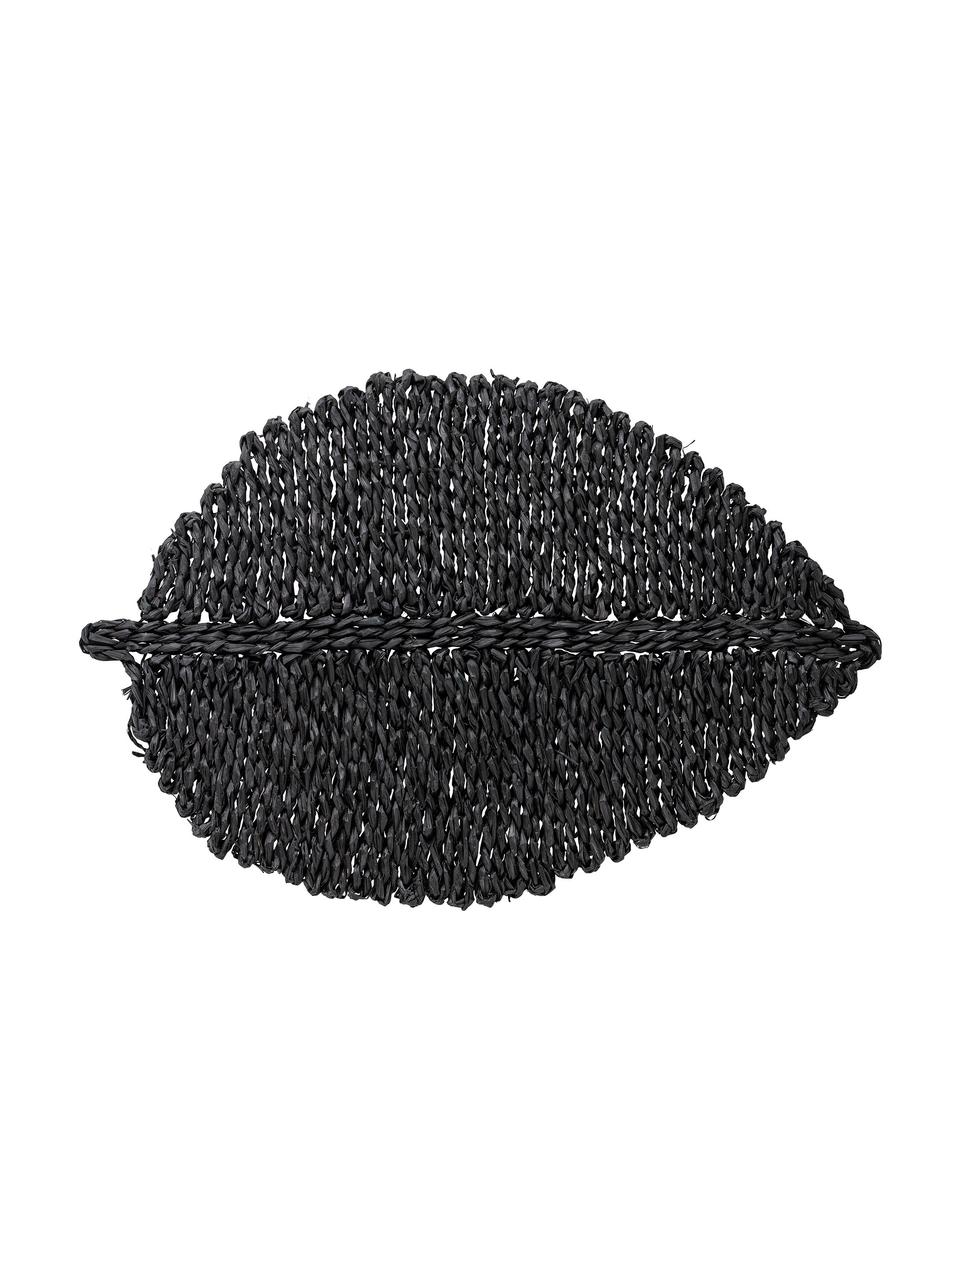 Zeegras placemat Isla in zwart, Gekleurd zeegras, Zwart, B 34 x L 50 cm